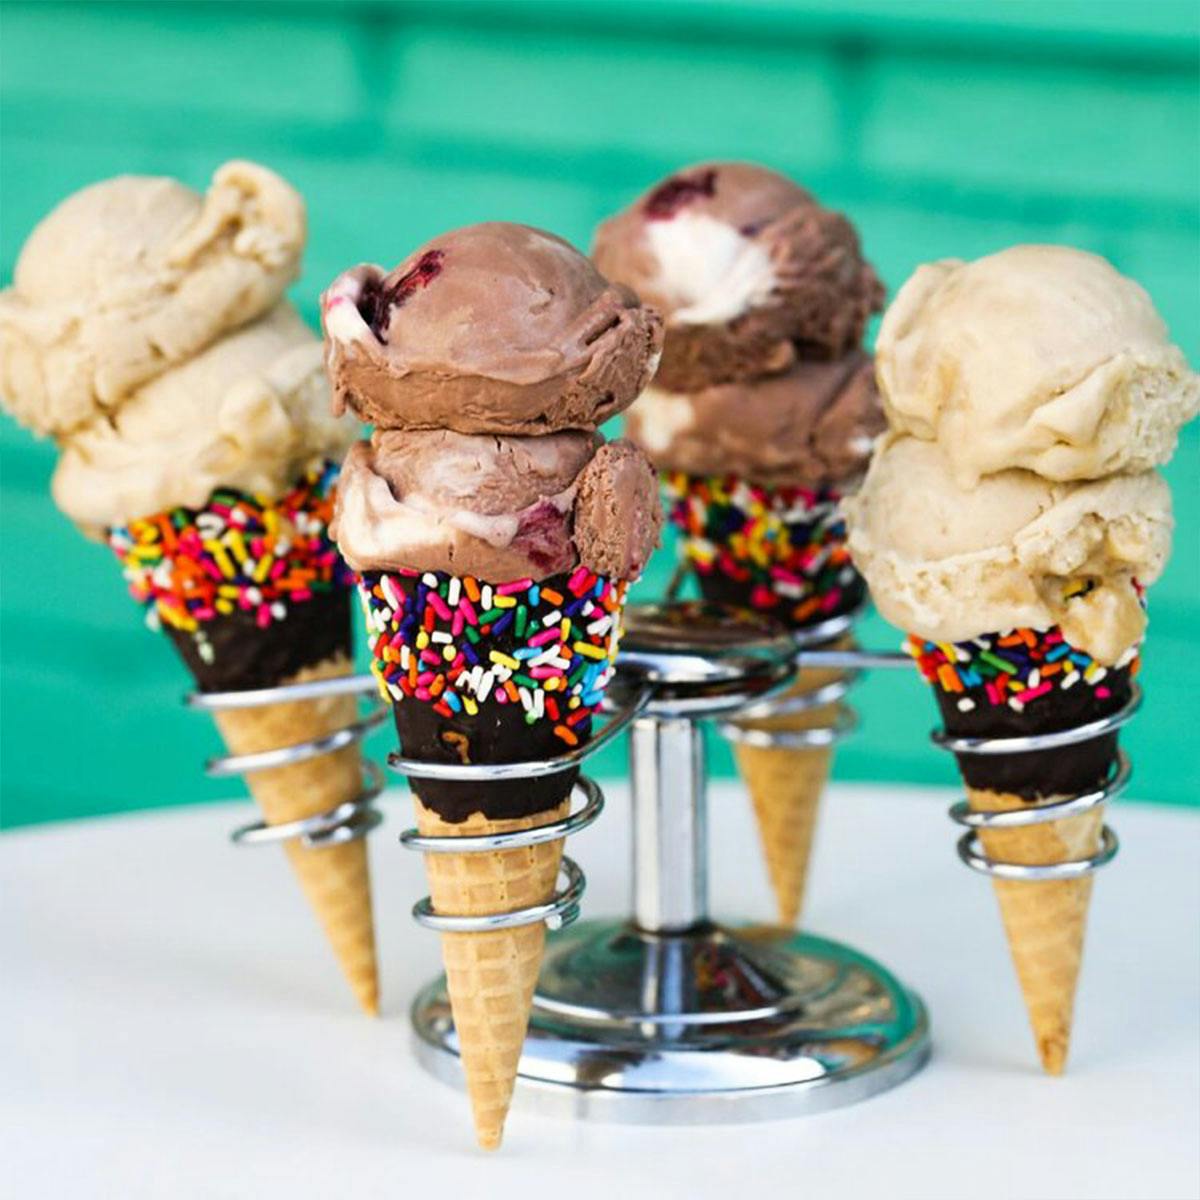 Davey's Ice Cream - Nationwide Shipping on Goldbelly